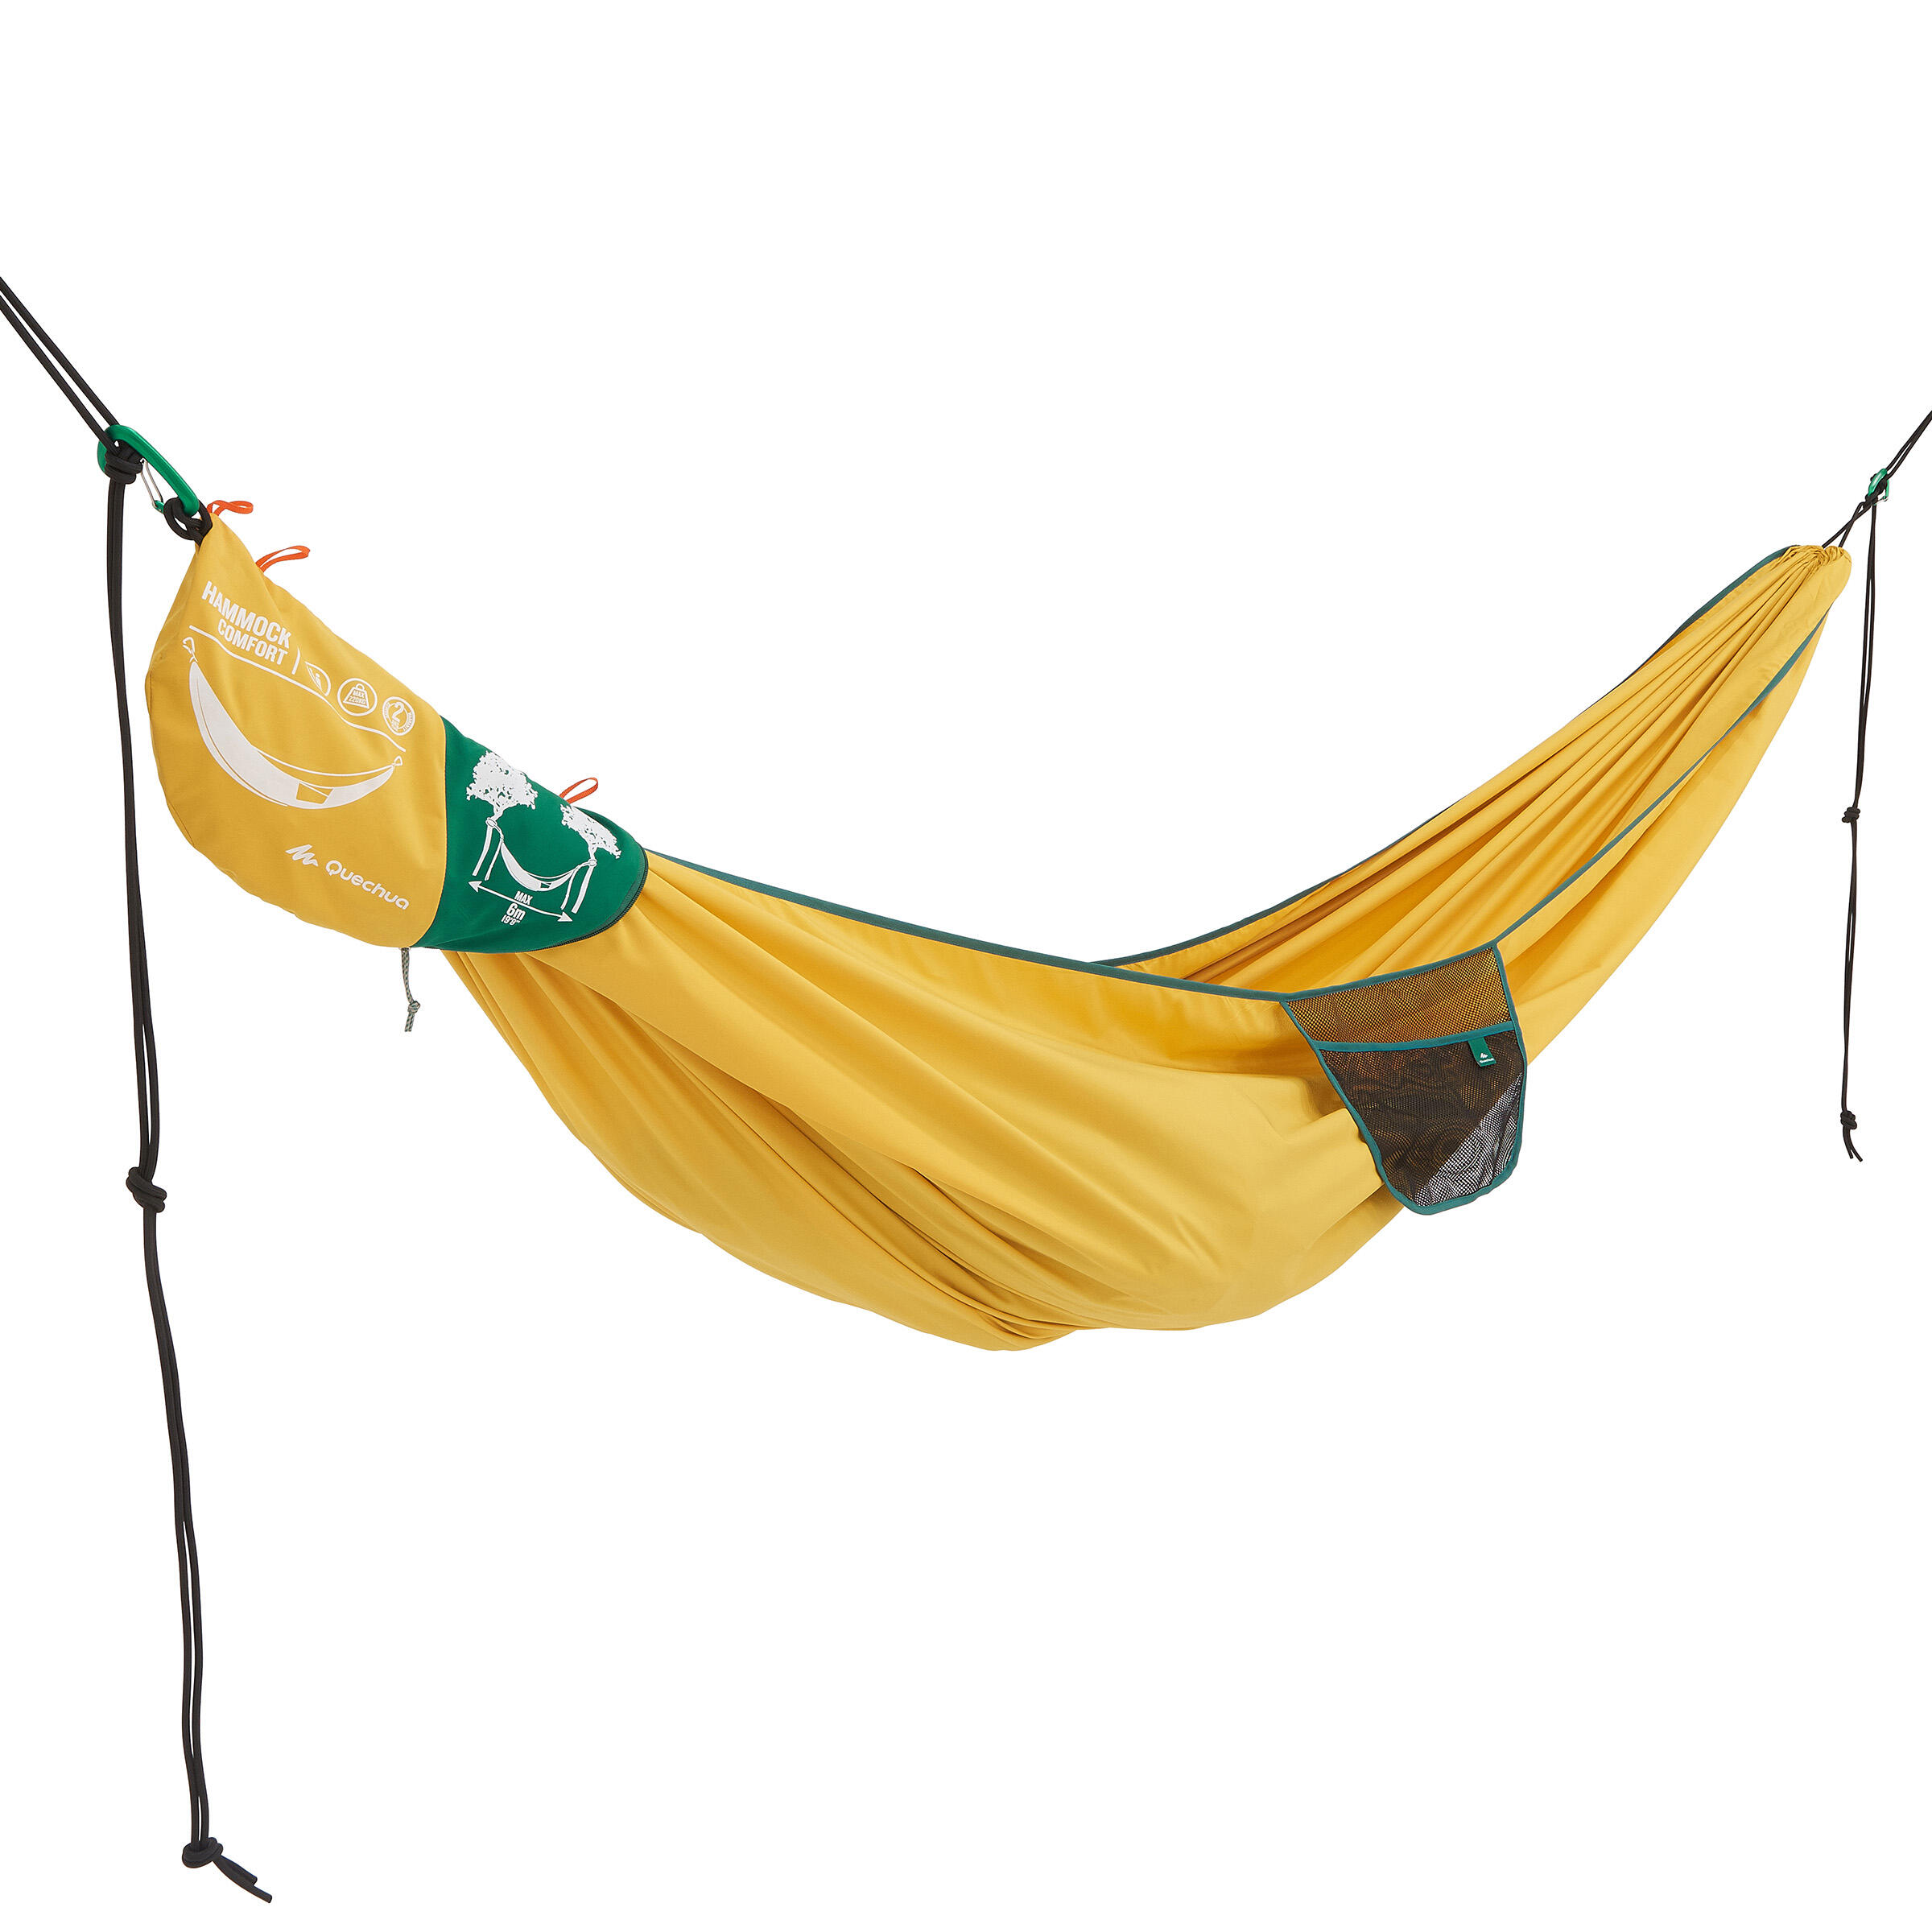 Two-person hammock - Comfort 280 x 175 